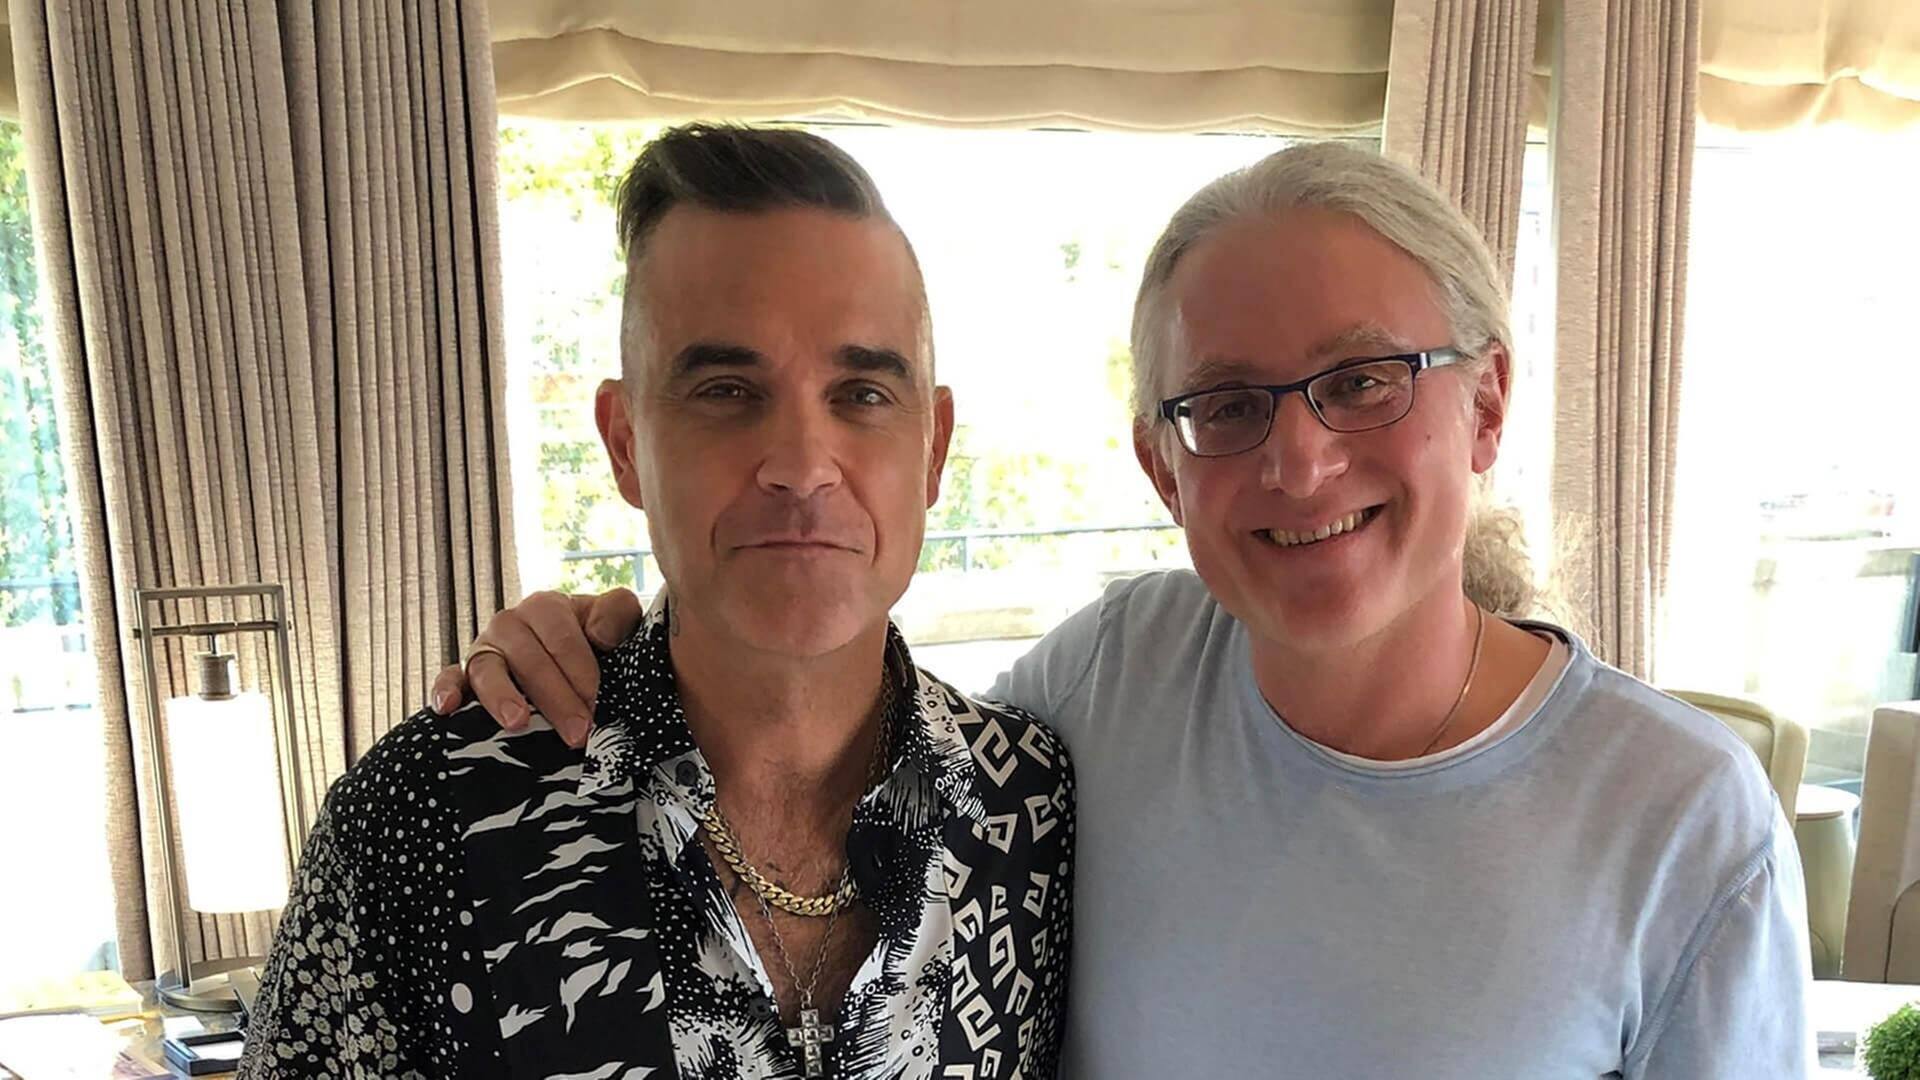 Robbie Williams und SWR3-Redakteur Matthias Kugler (Foto: Matthias Kugler)